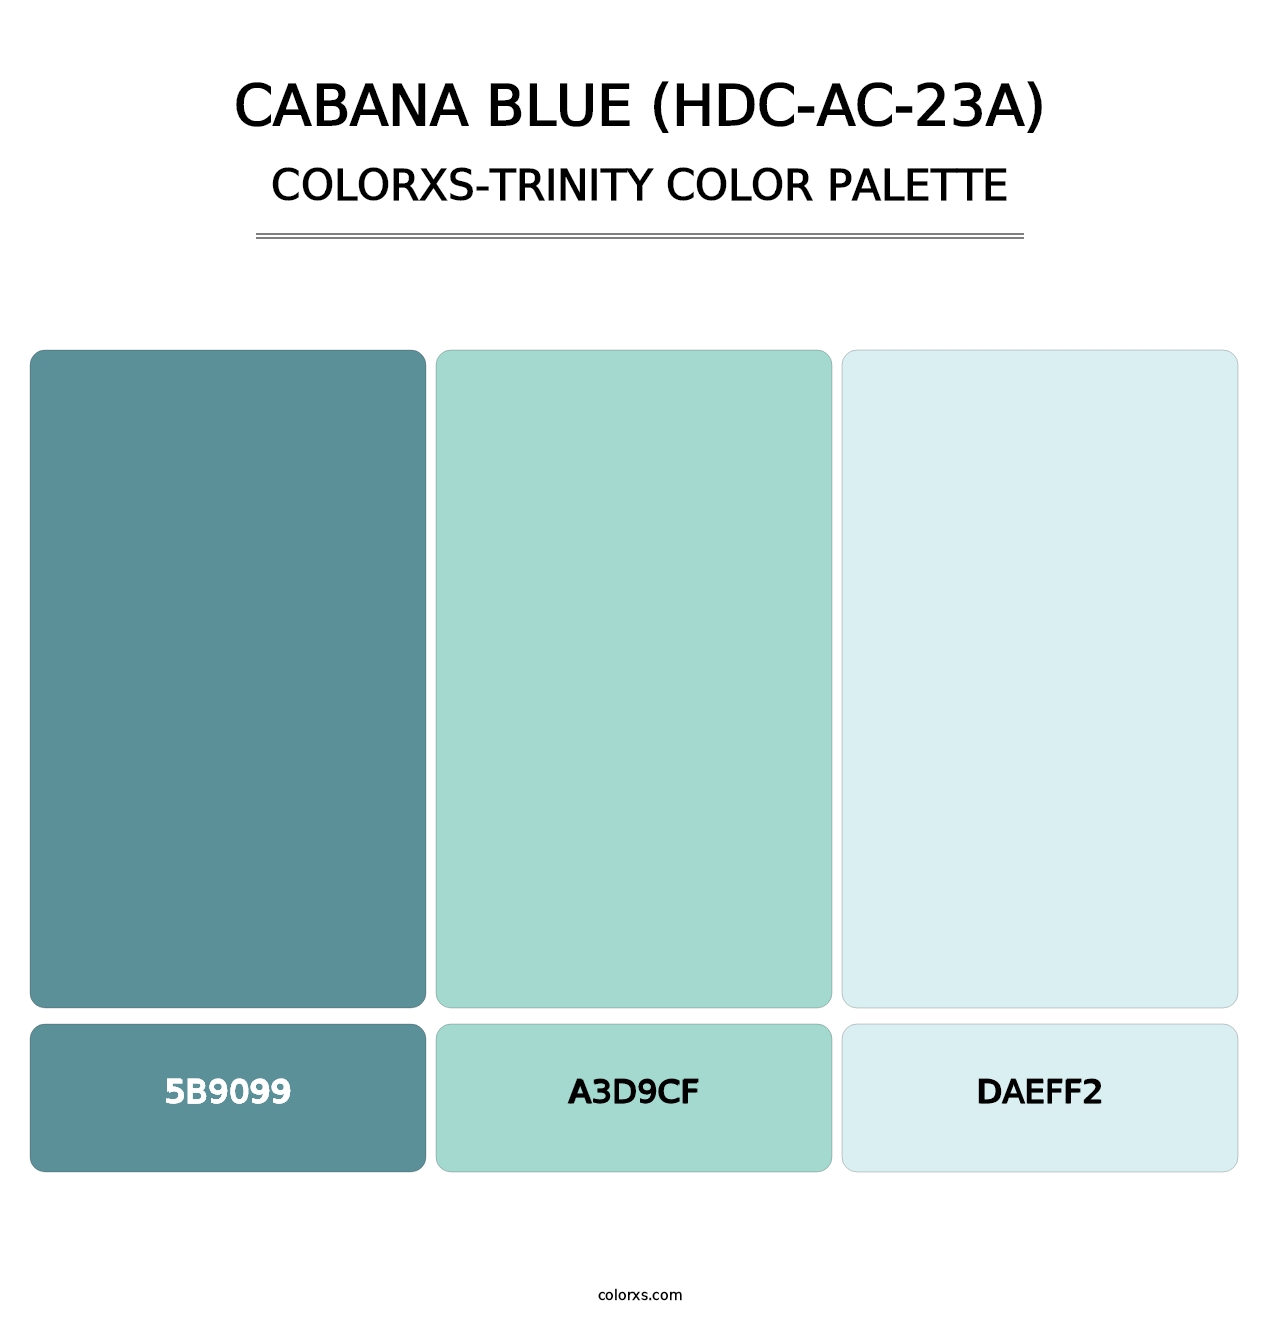 Cabana Blue (HDC-AC-23A) - Colorxs Trinity Palette